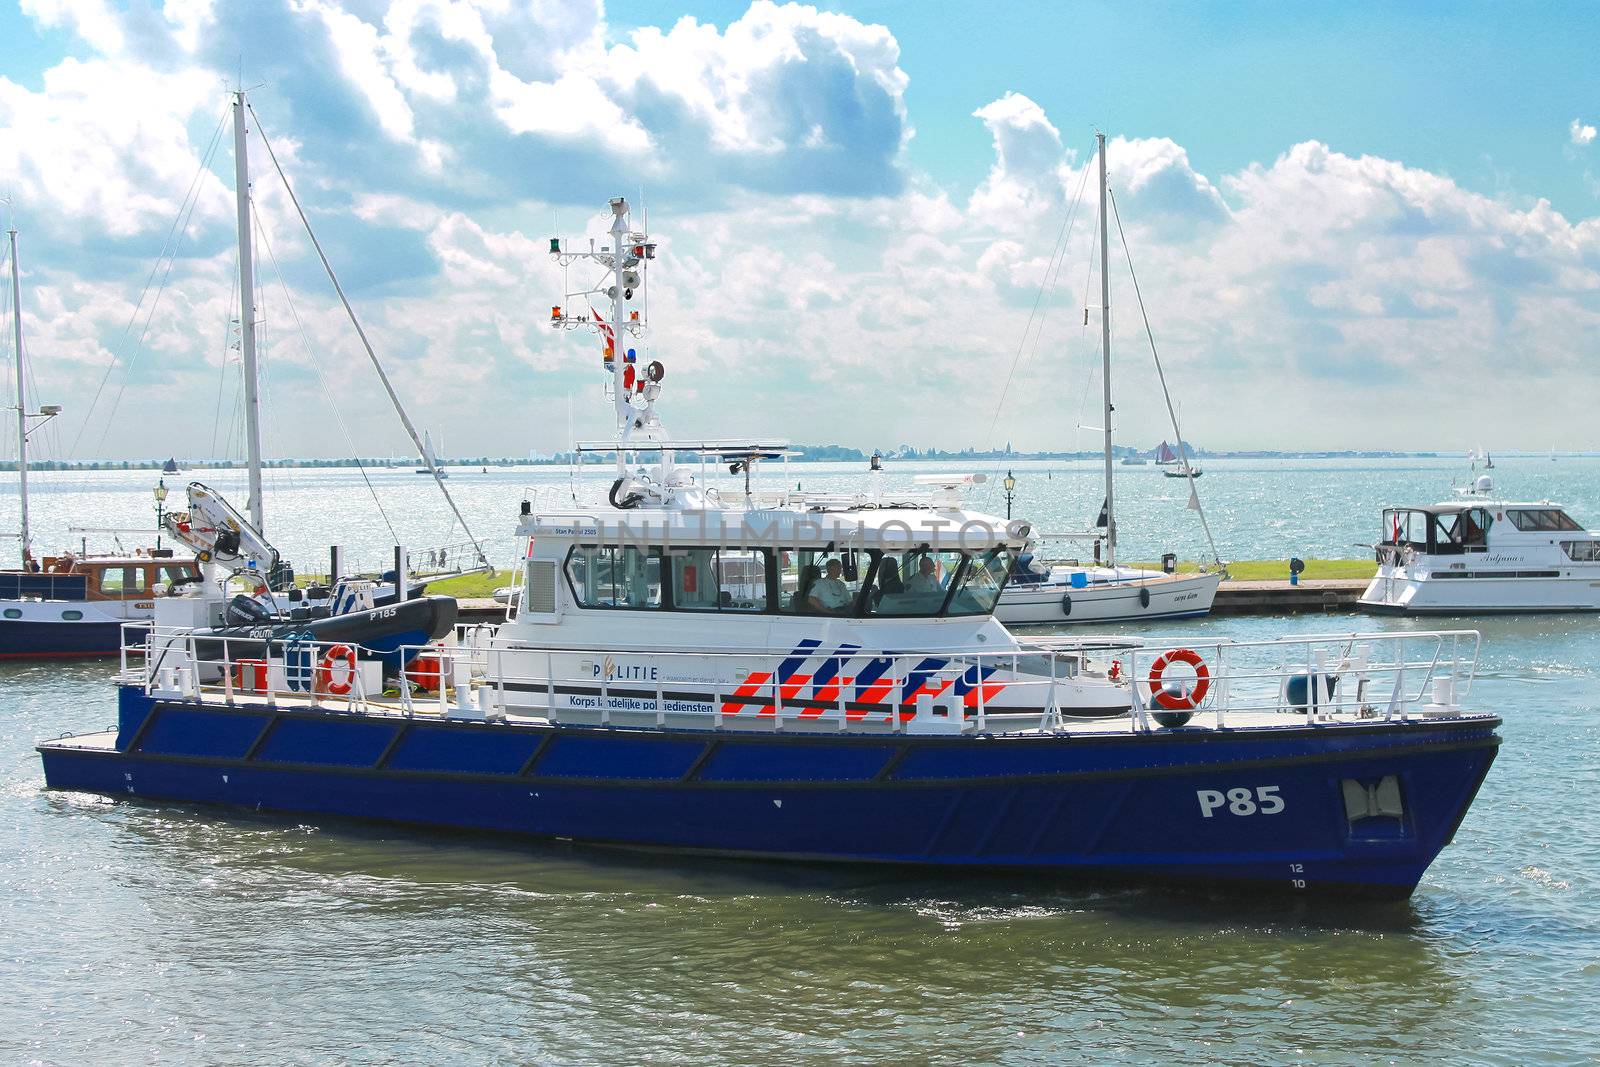 Police boat in the port of Volendam. Netherlands